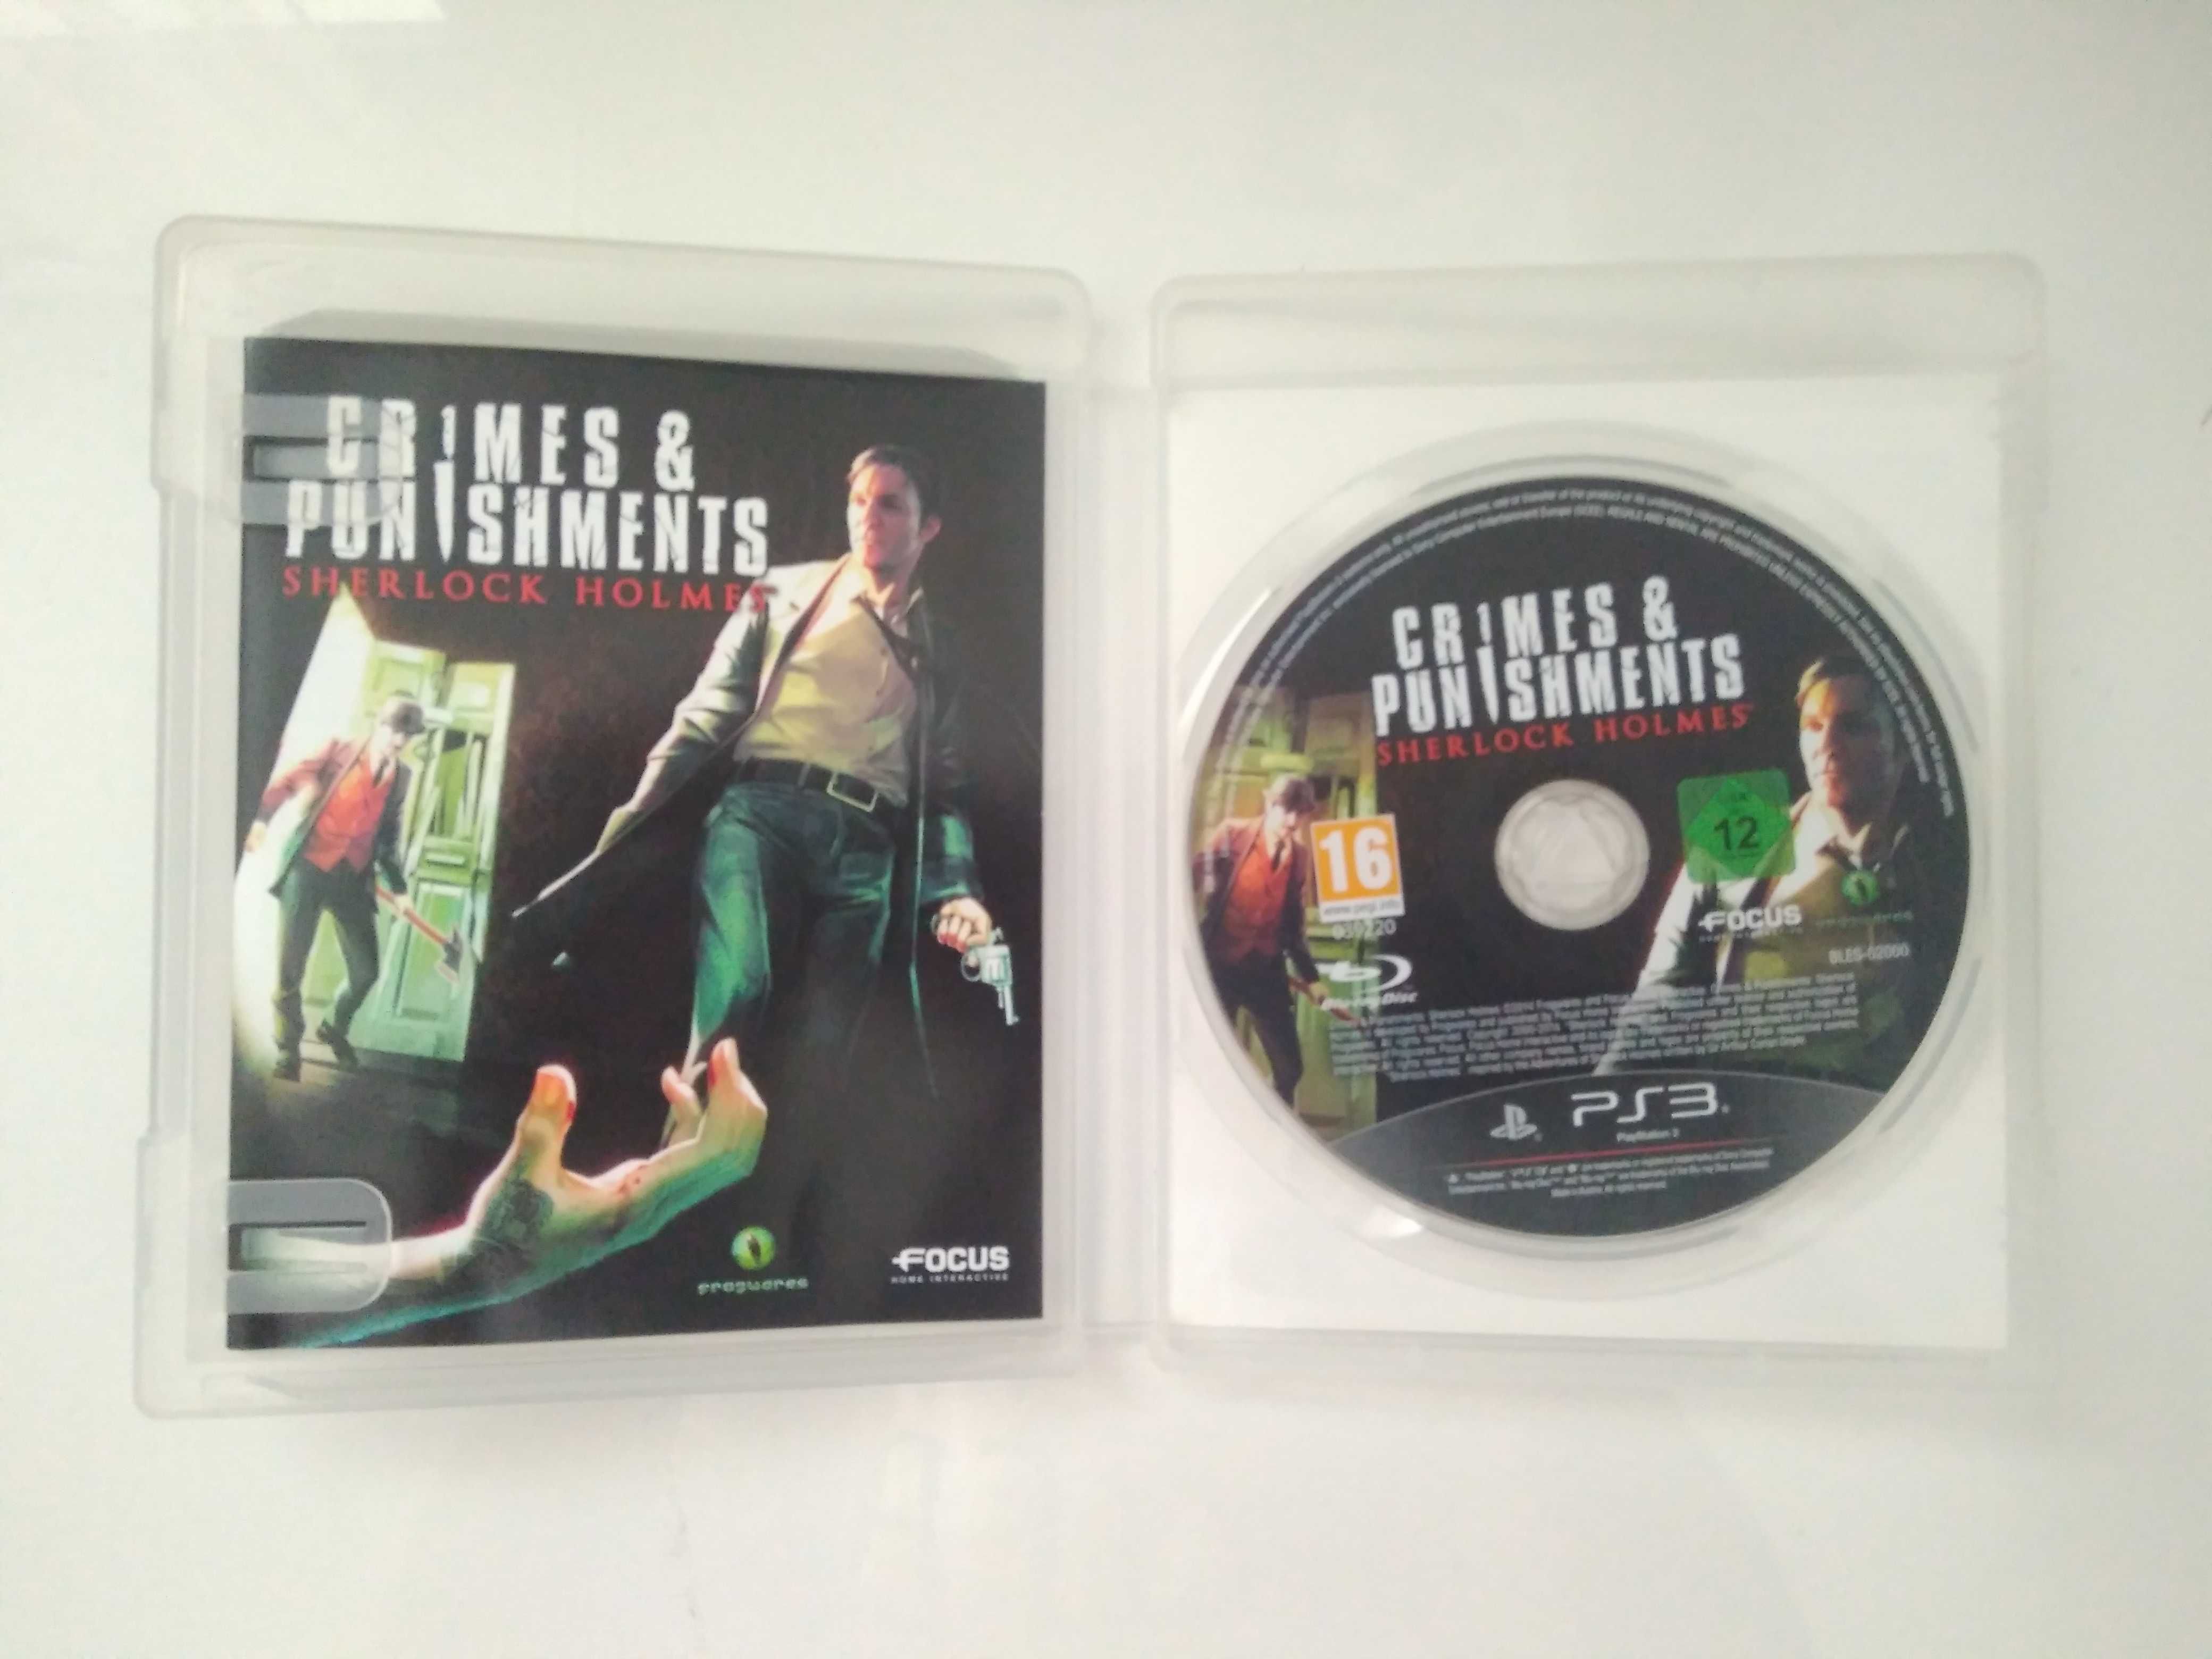 Playstation3 Crimes & Punishments Sherlock Holmes PS3